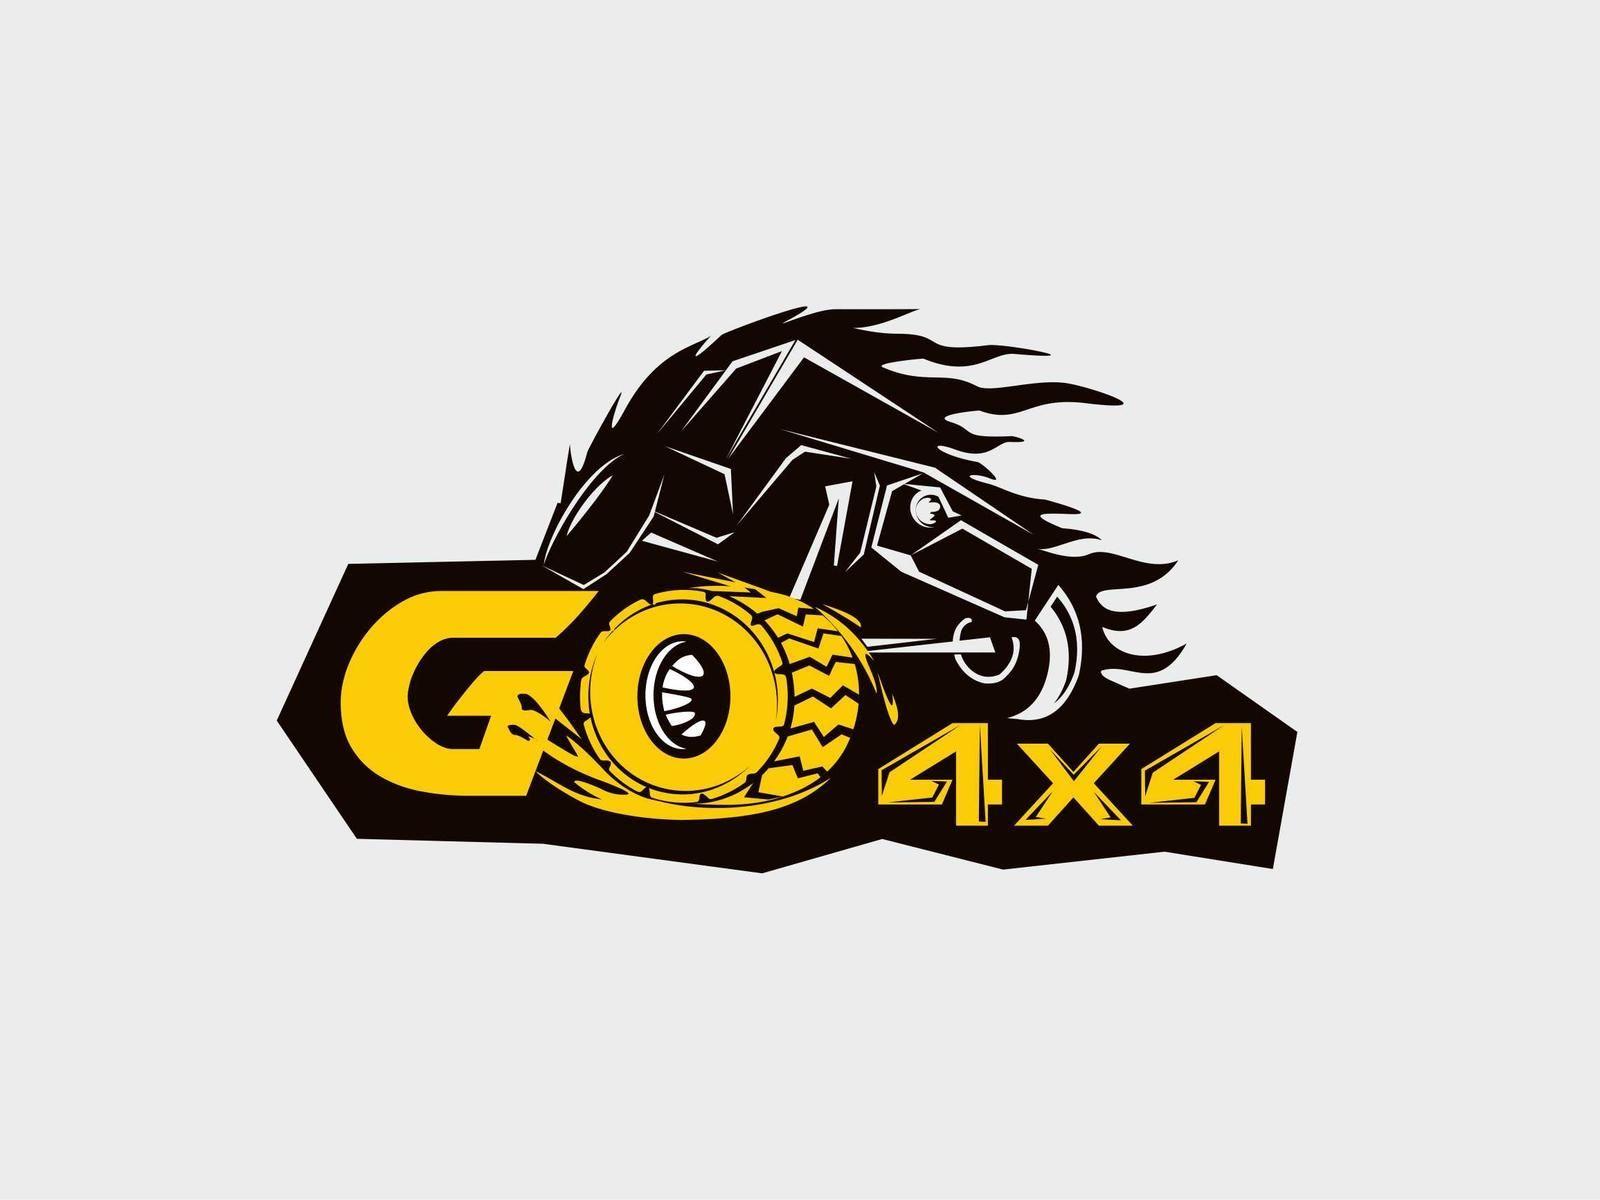 Off-Road Brand Logo - Improve a Logo for Go4x4 Community by zvercat. Good